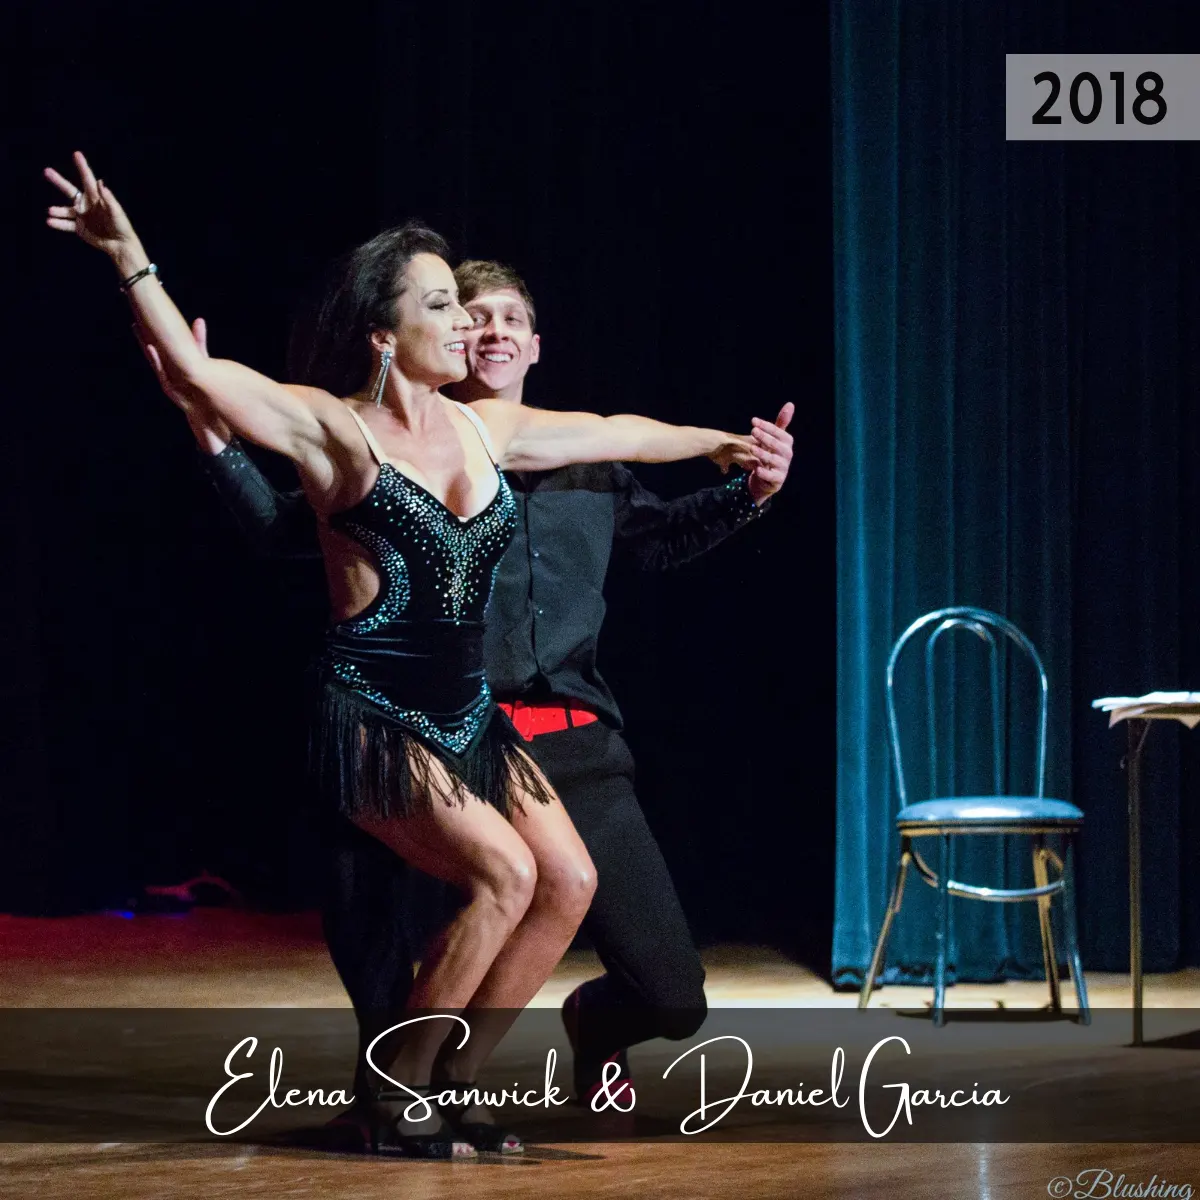 2018 Hall of Fame - Elena Sanwick and Daniel Garcia